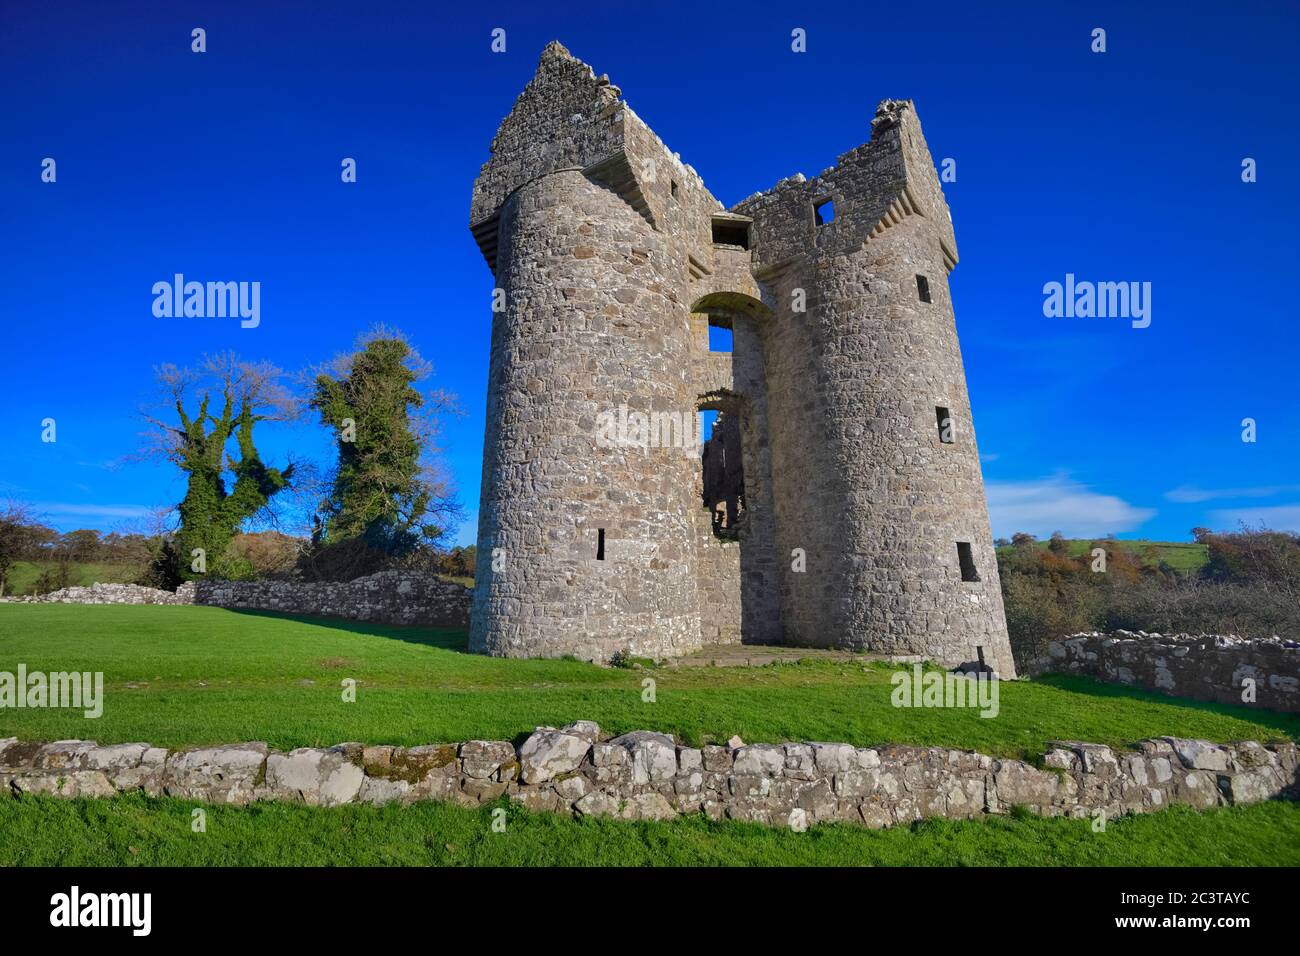 Northern Ireland, County Fermanagh. Monea Castle, a 17th century Plantation rectangular tower house. Stock Photo